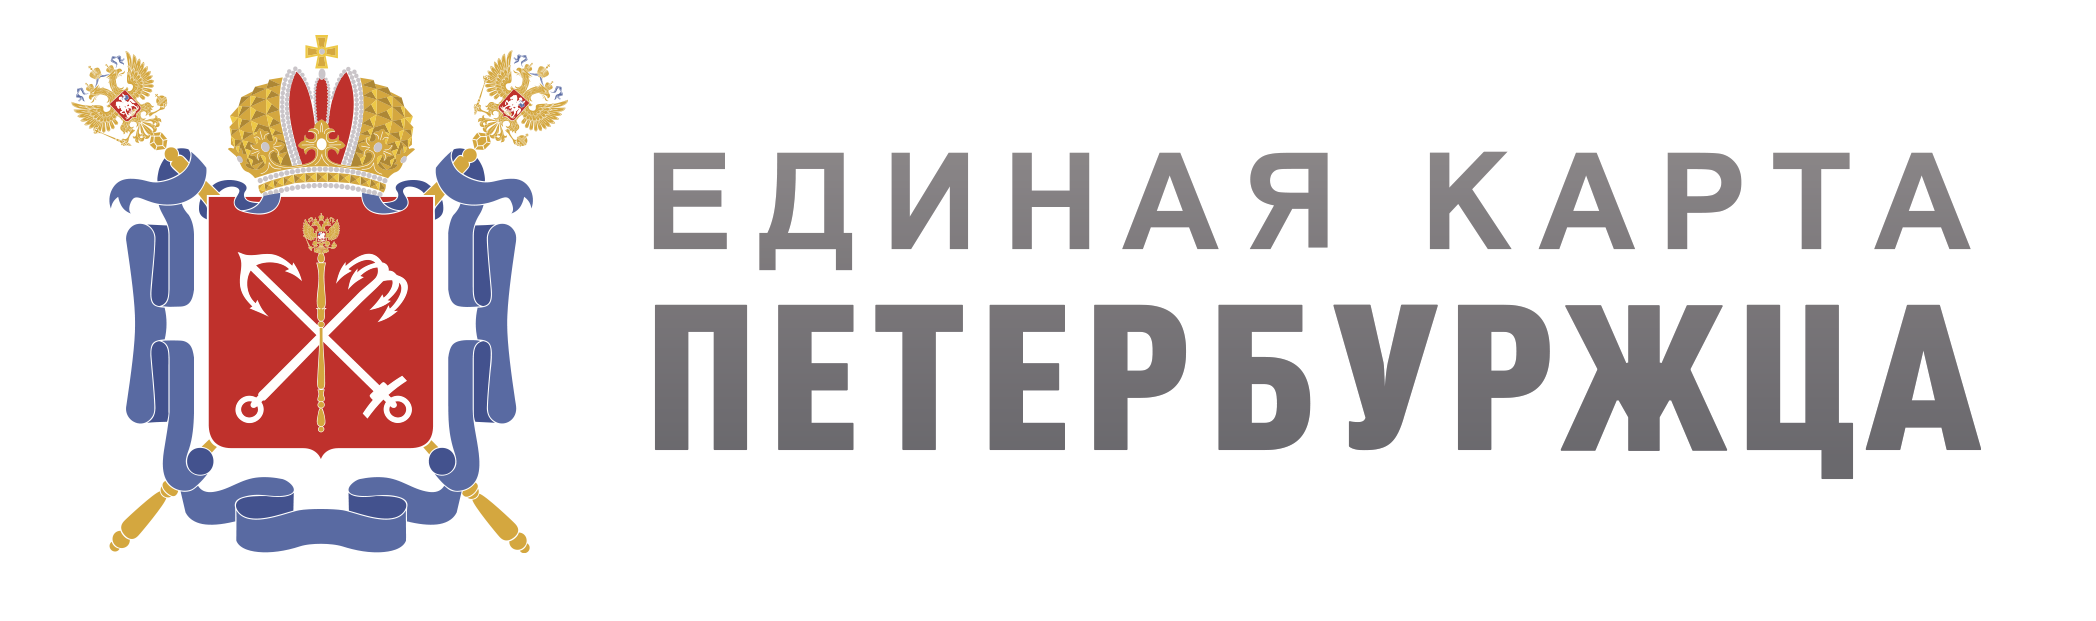 Администрация Санкт-Петербурга - ЕКП - Единая карта петербуржца - ekp.spb.ru